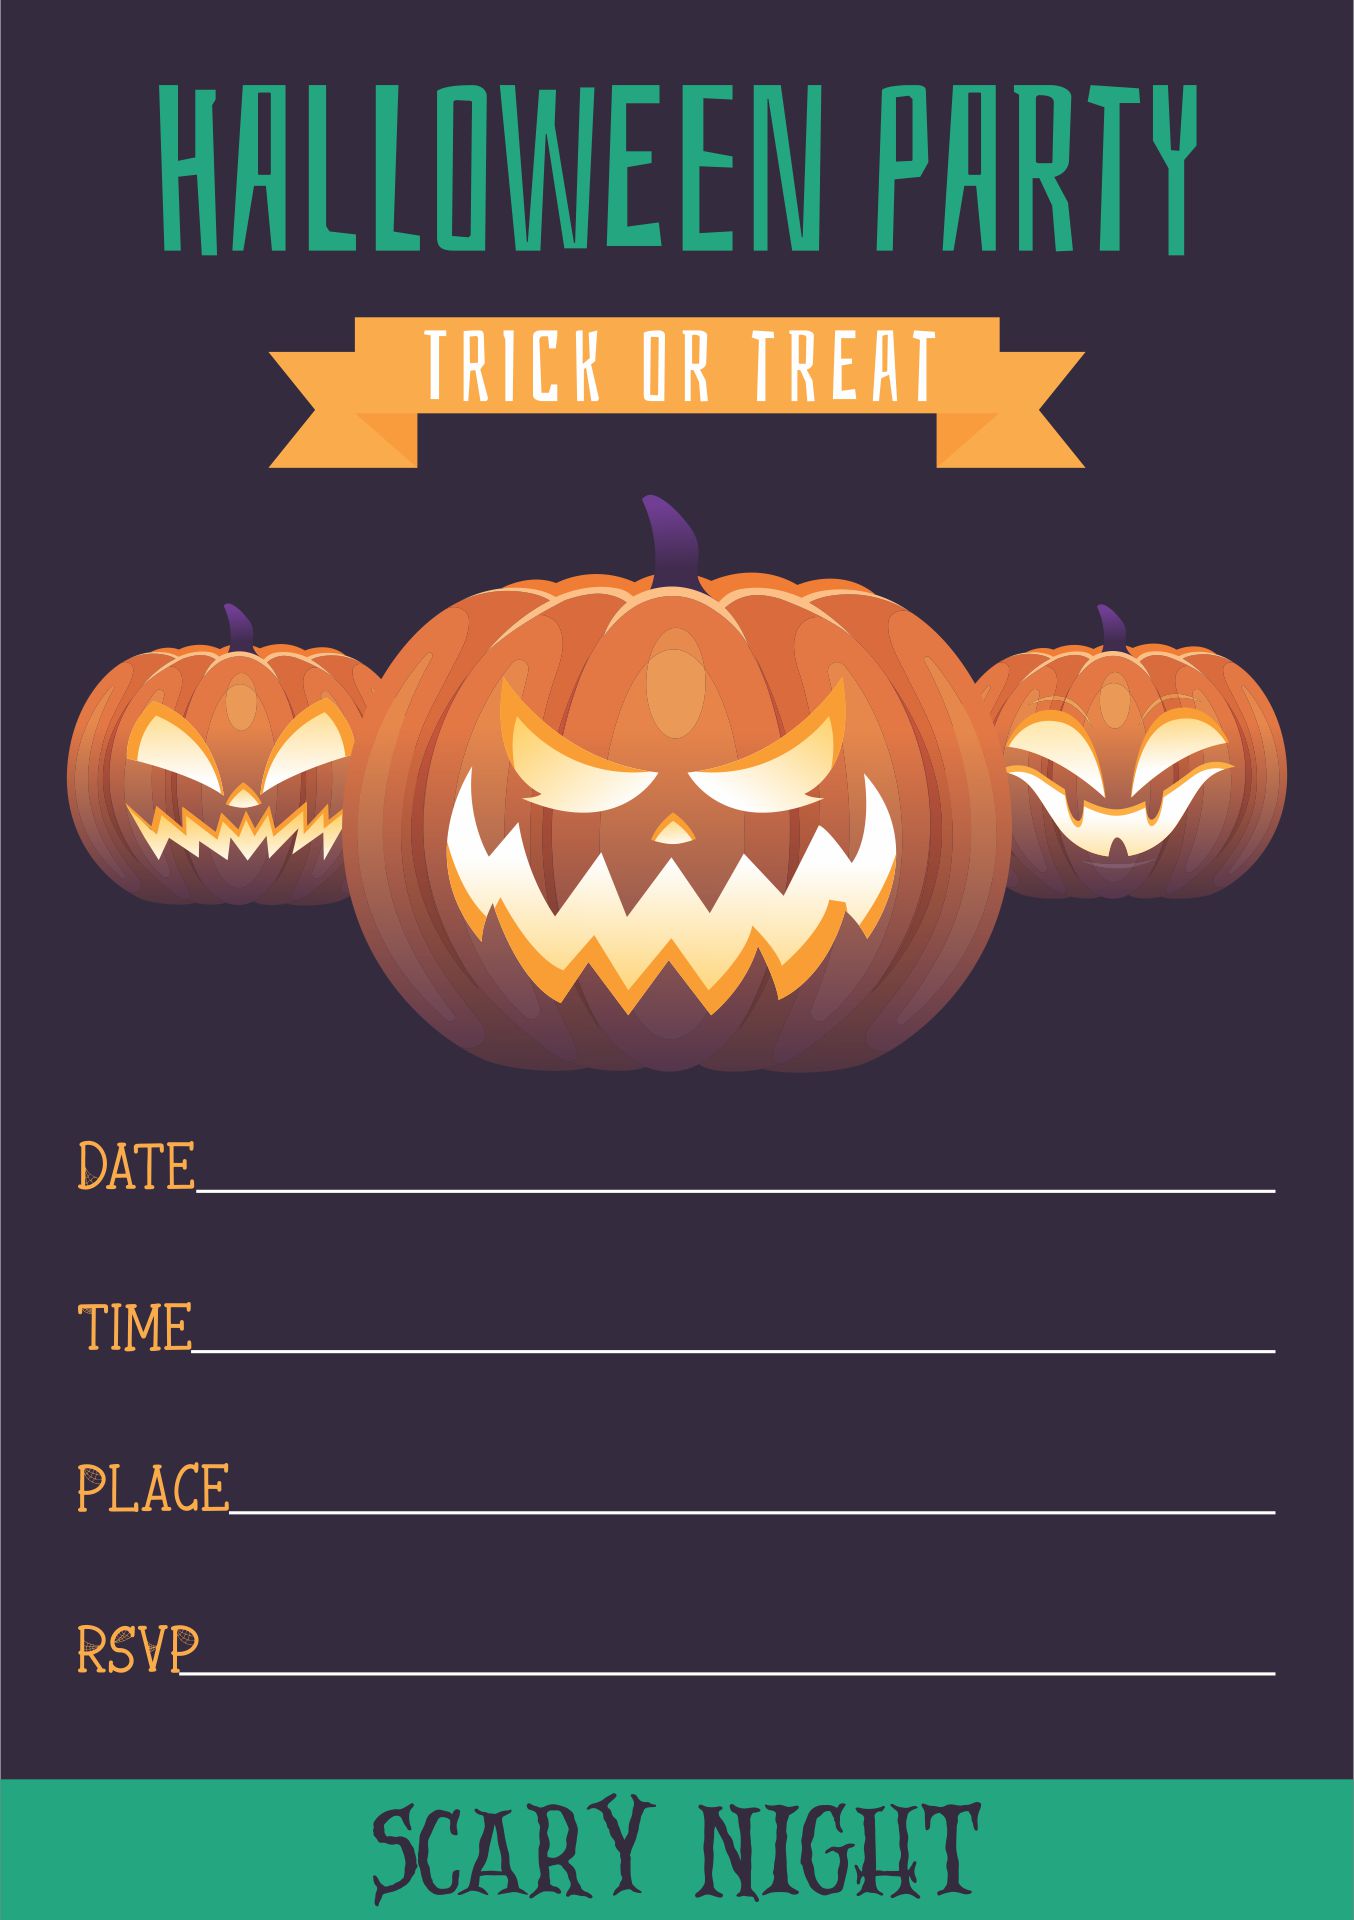 15 Best Free Printable Blank Halloween Invitations